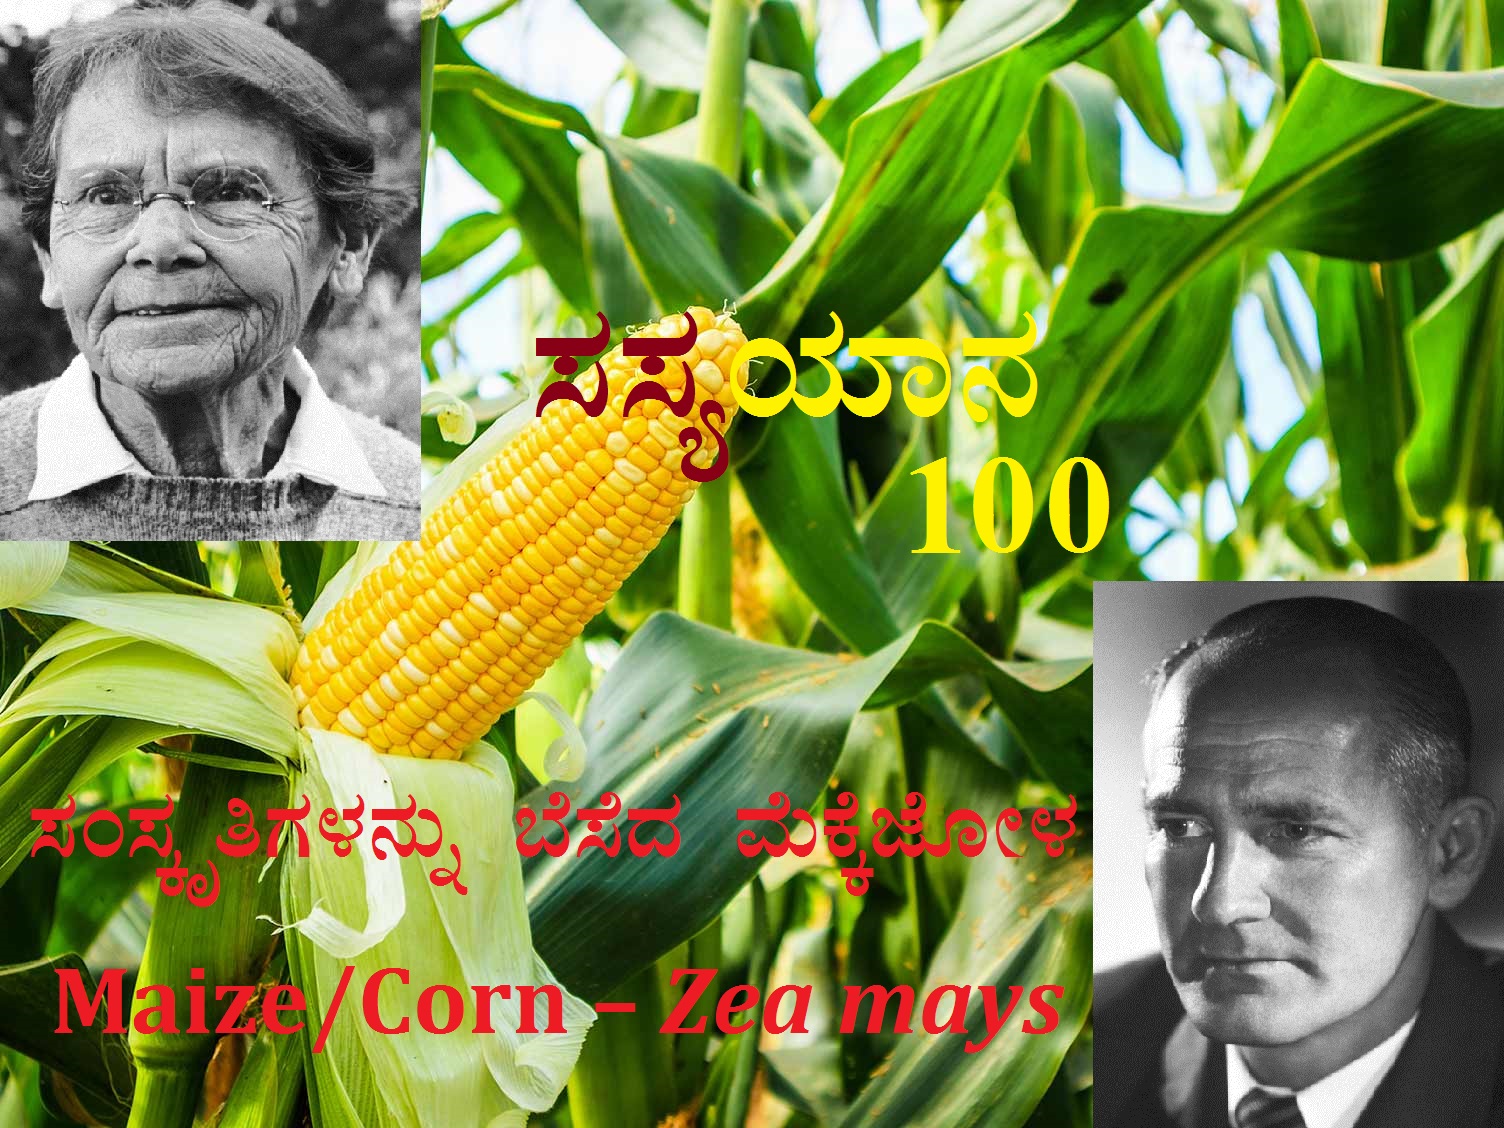 You are currently viewing ಸಂಸ್ಕೃತಿಗಳನ್ನು ಬೆಸೆದ ಮೆಕ್ಕೆಜೋಳ : Maize/Corn – Zea mays